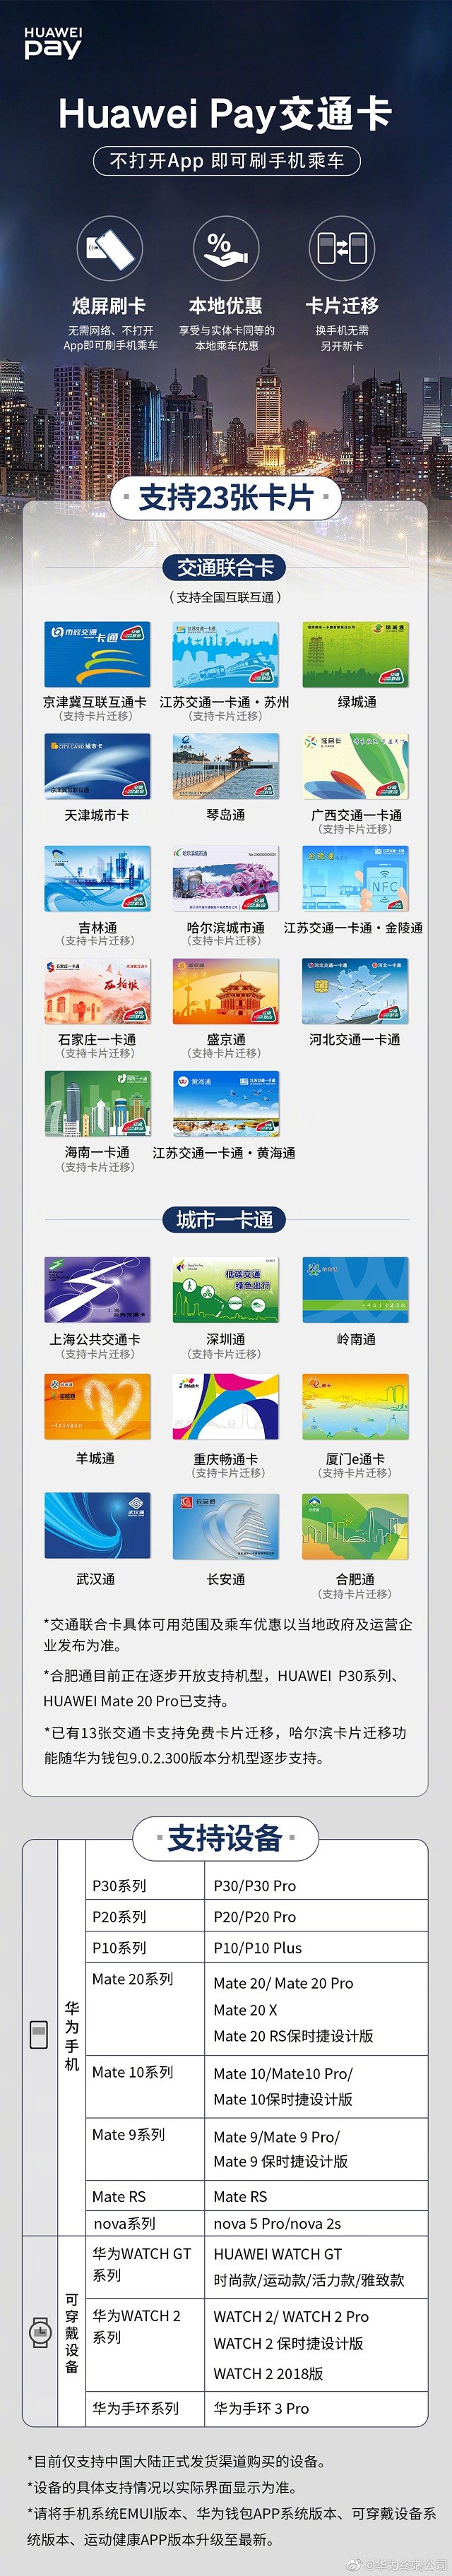 Huawei Pay现已支持23张交通卡 257座城市畅游无忧 